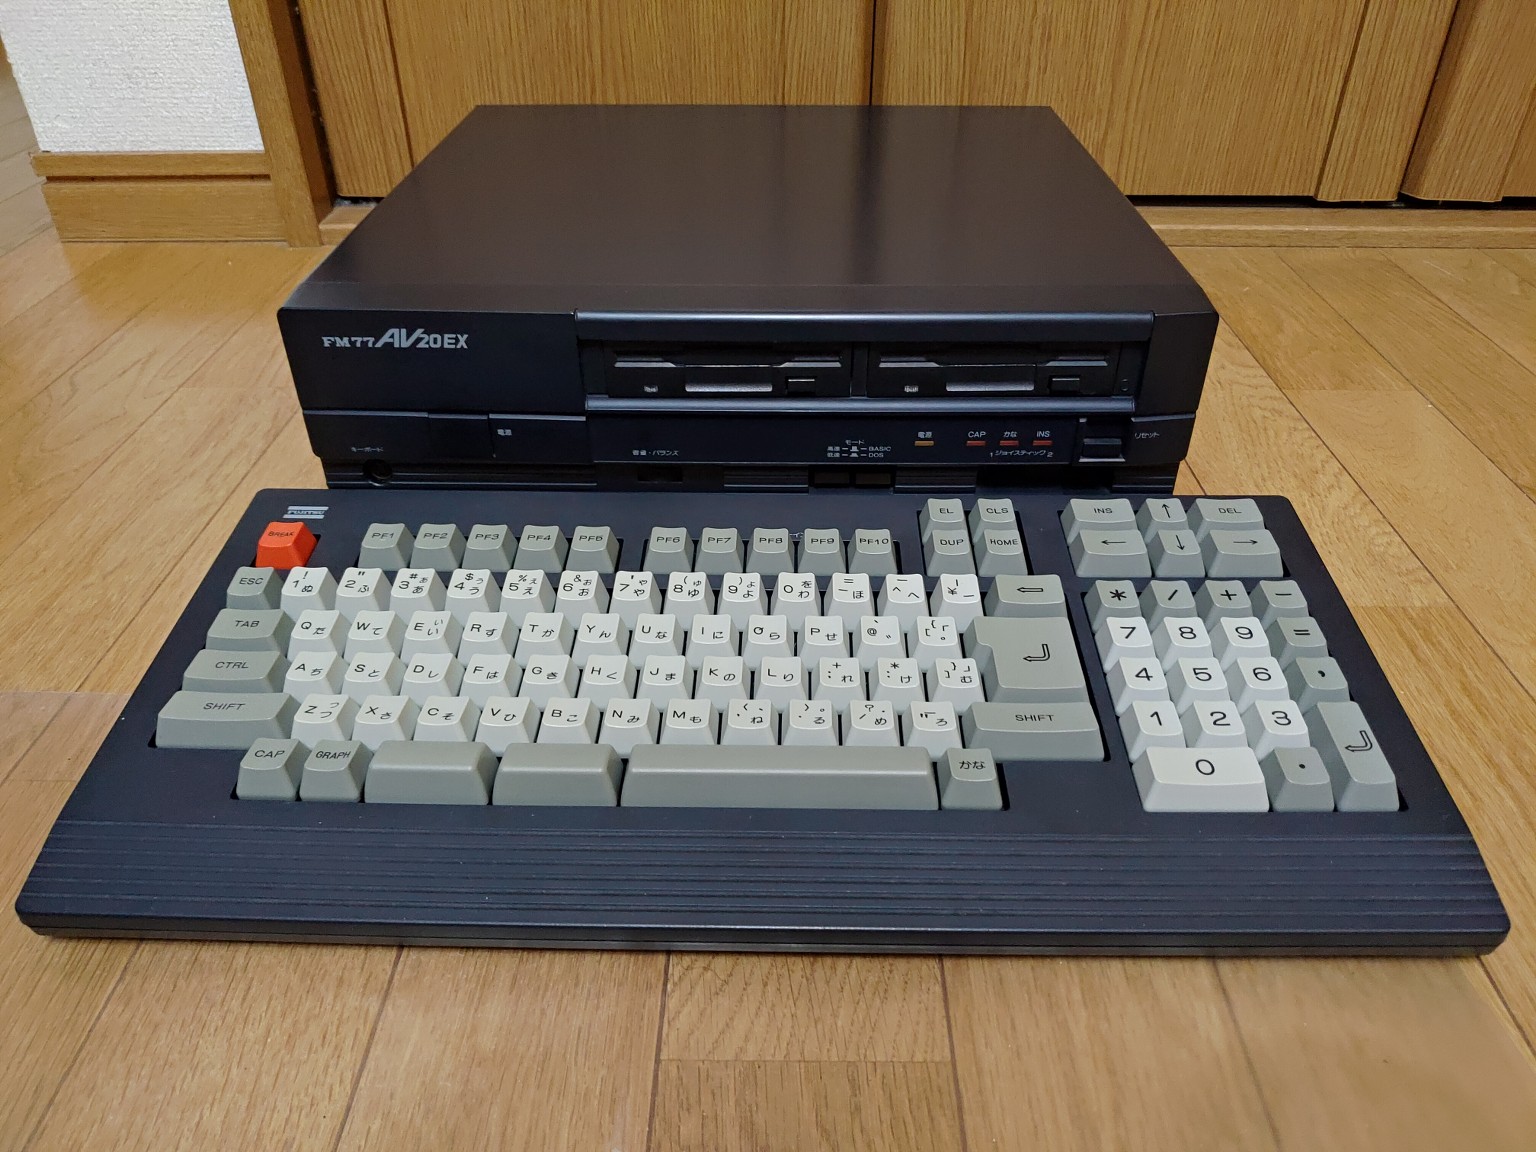 Fujitsu FM77AV20EX – Japanese Vintage Computer Collection